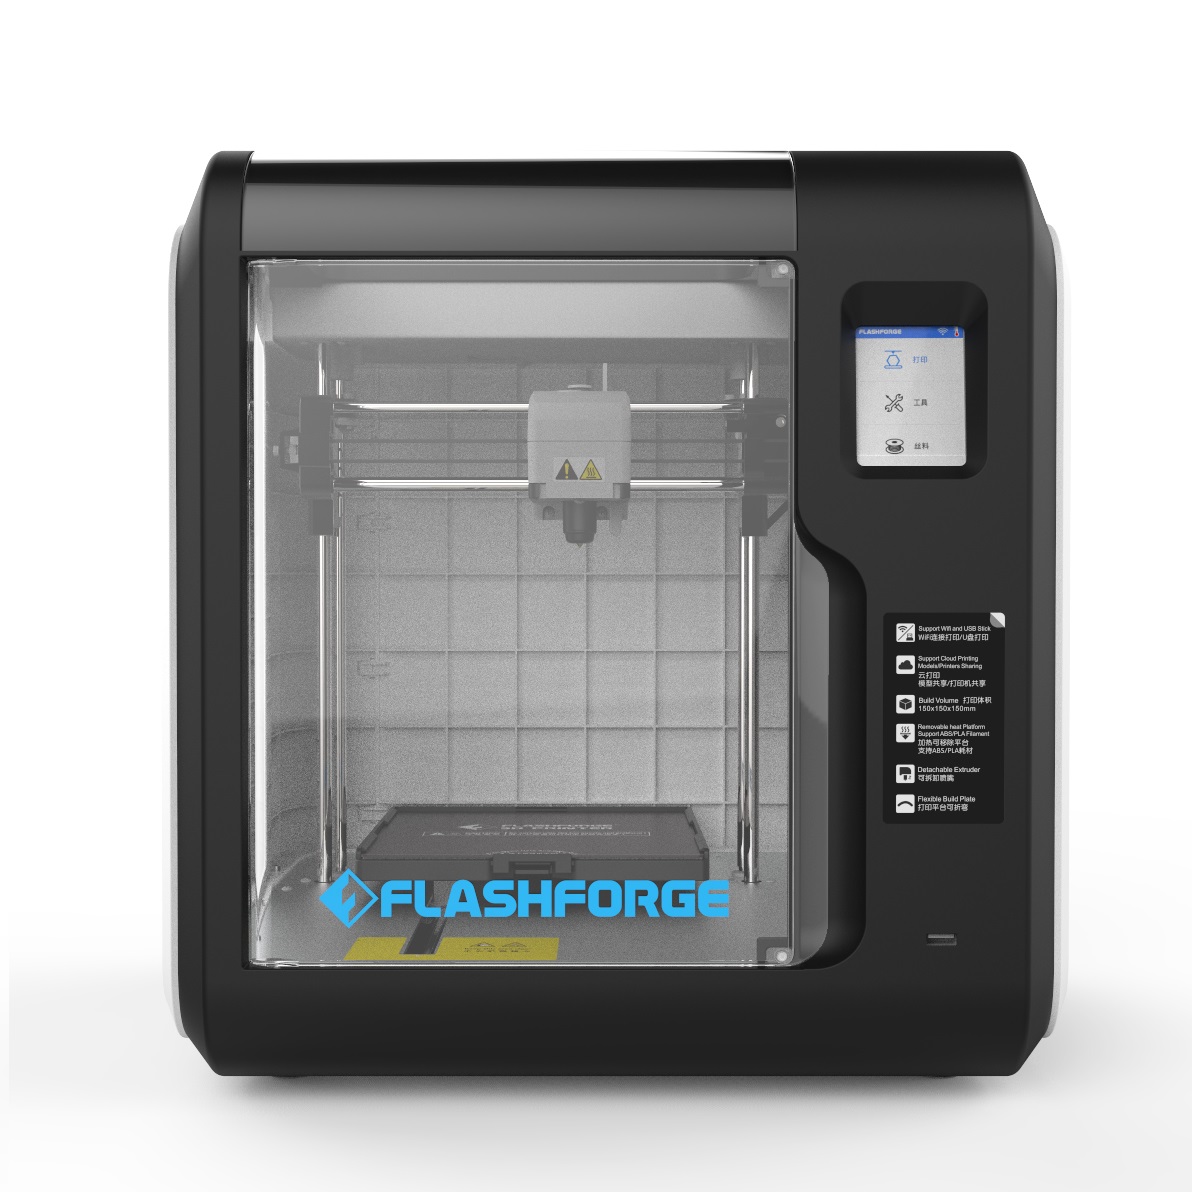 FlashForge Adventurer 3 3D Printer